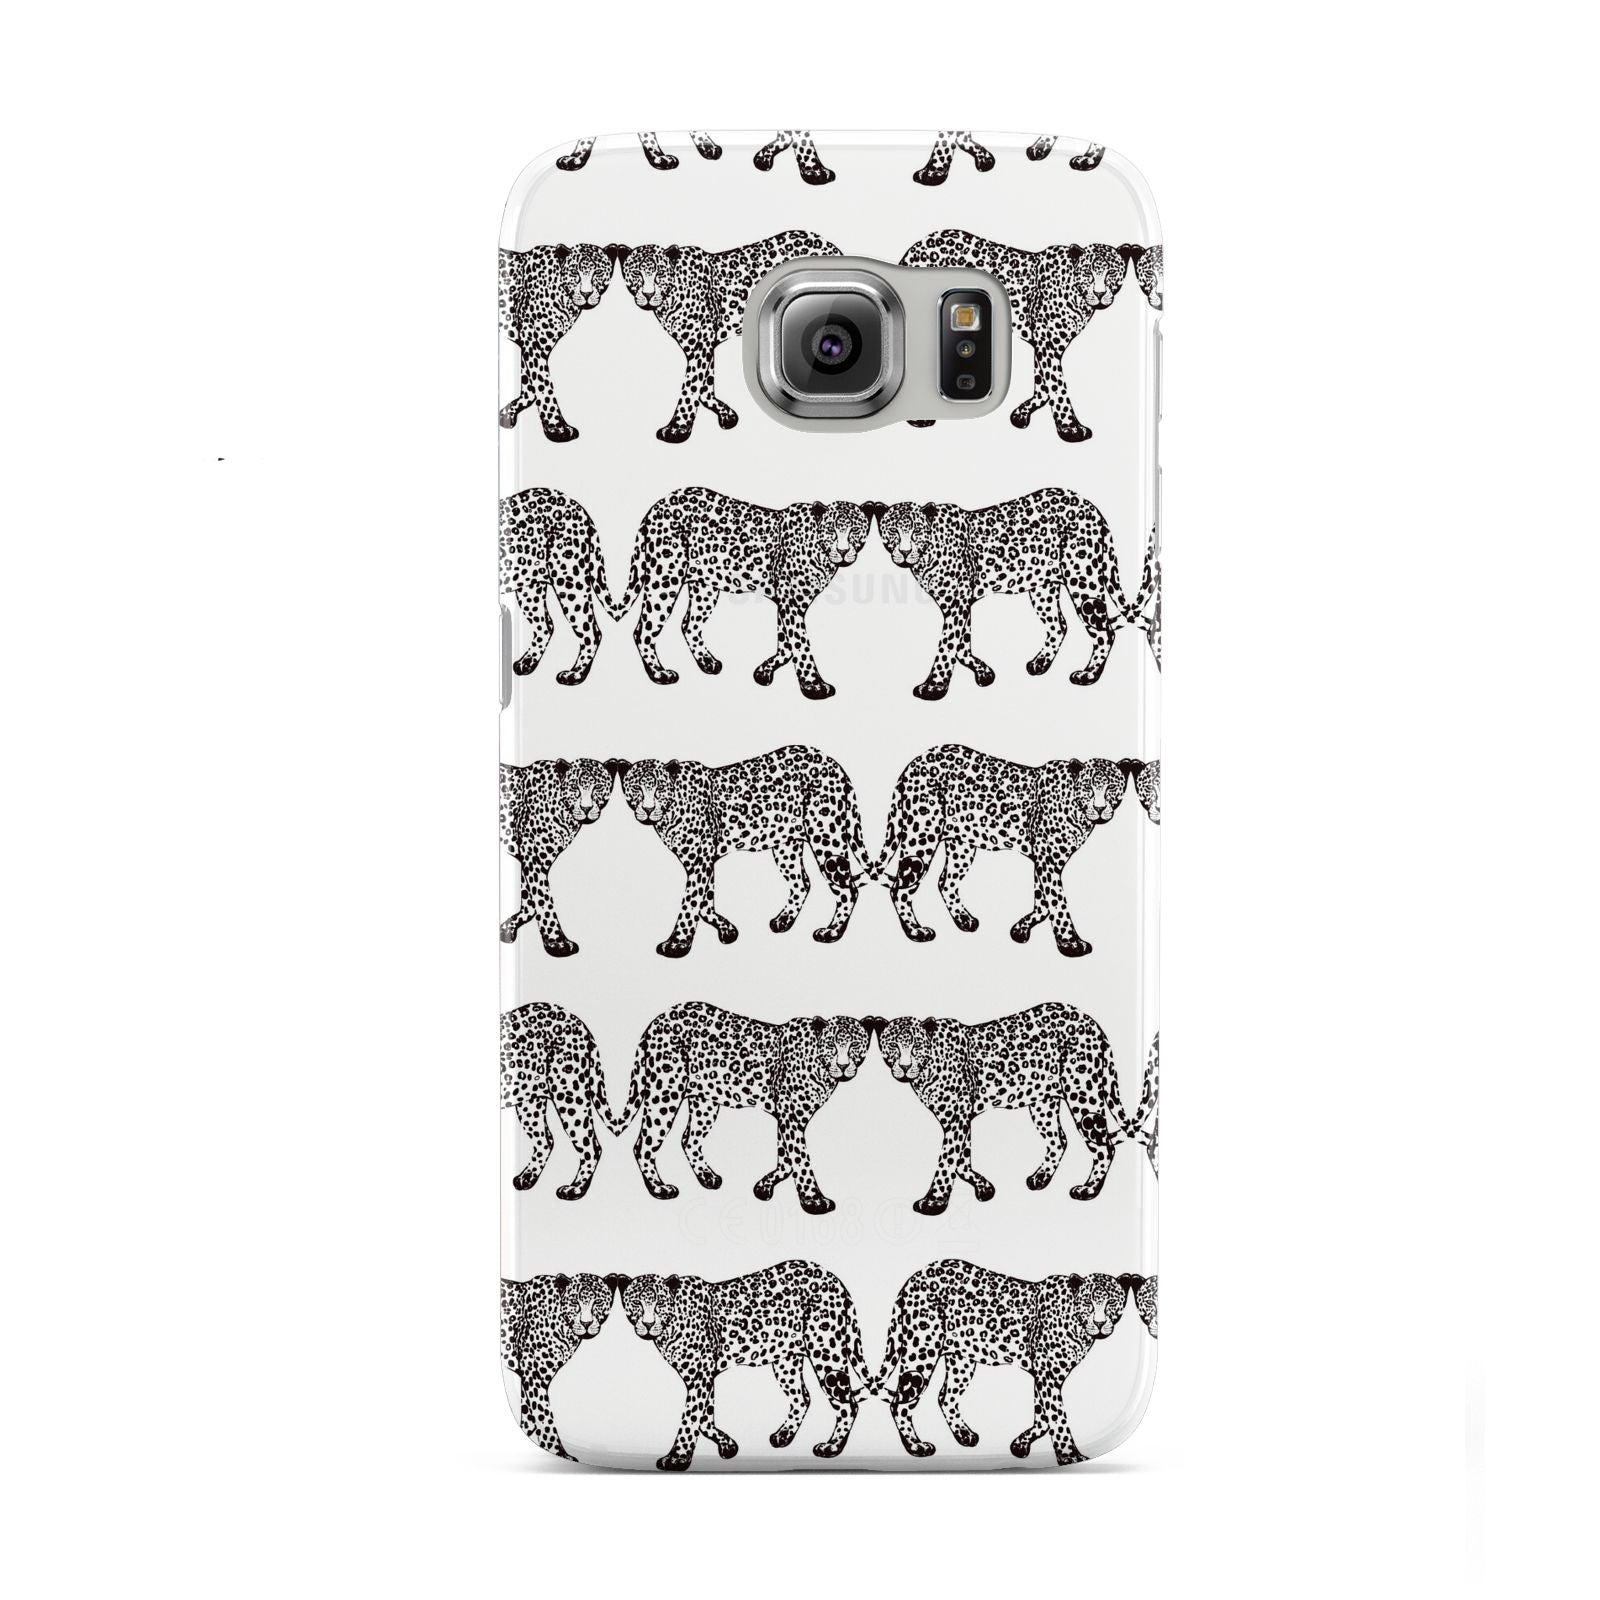 Monochrome Mirrored Leopard Print Samsung Galaxy S6 Case